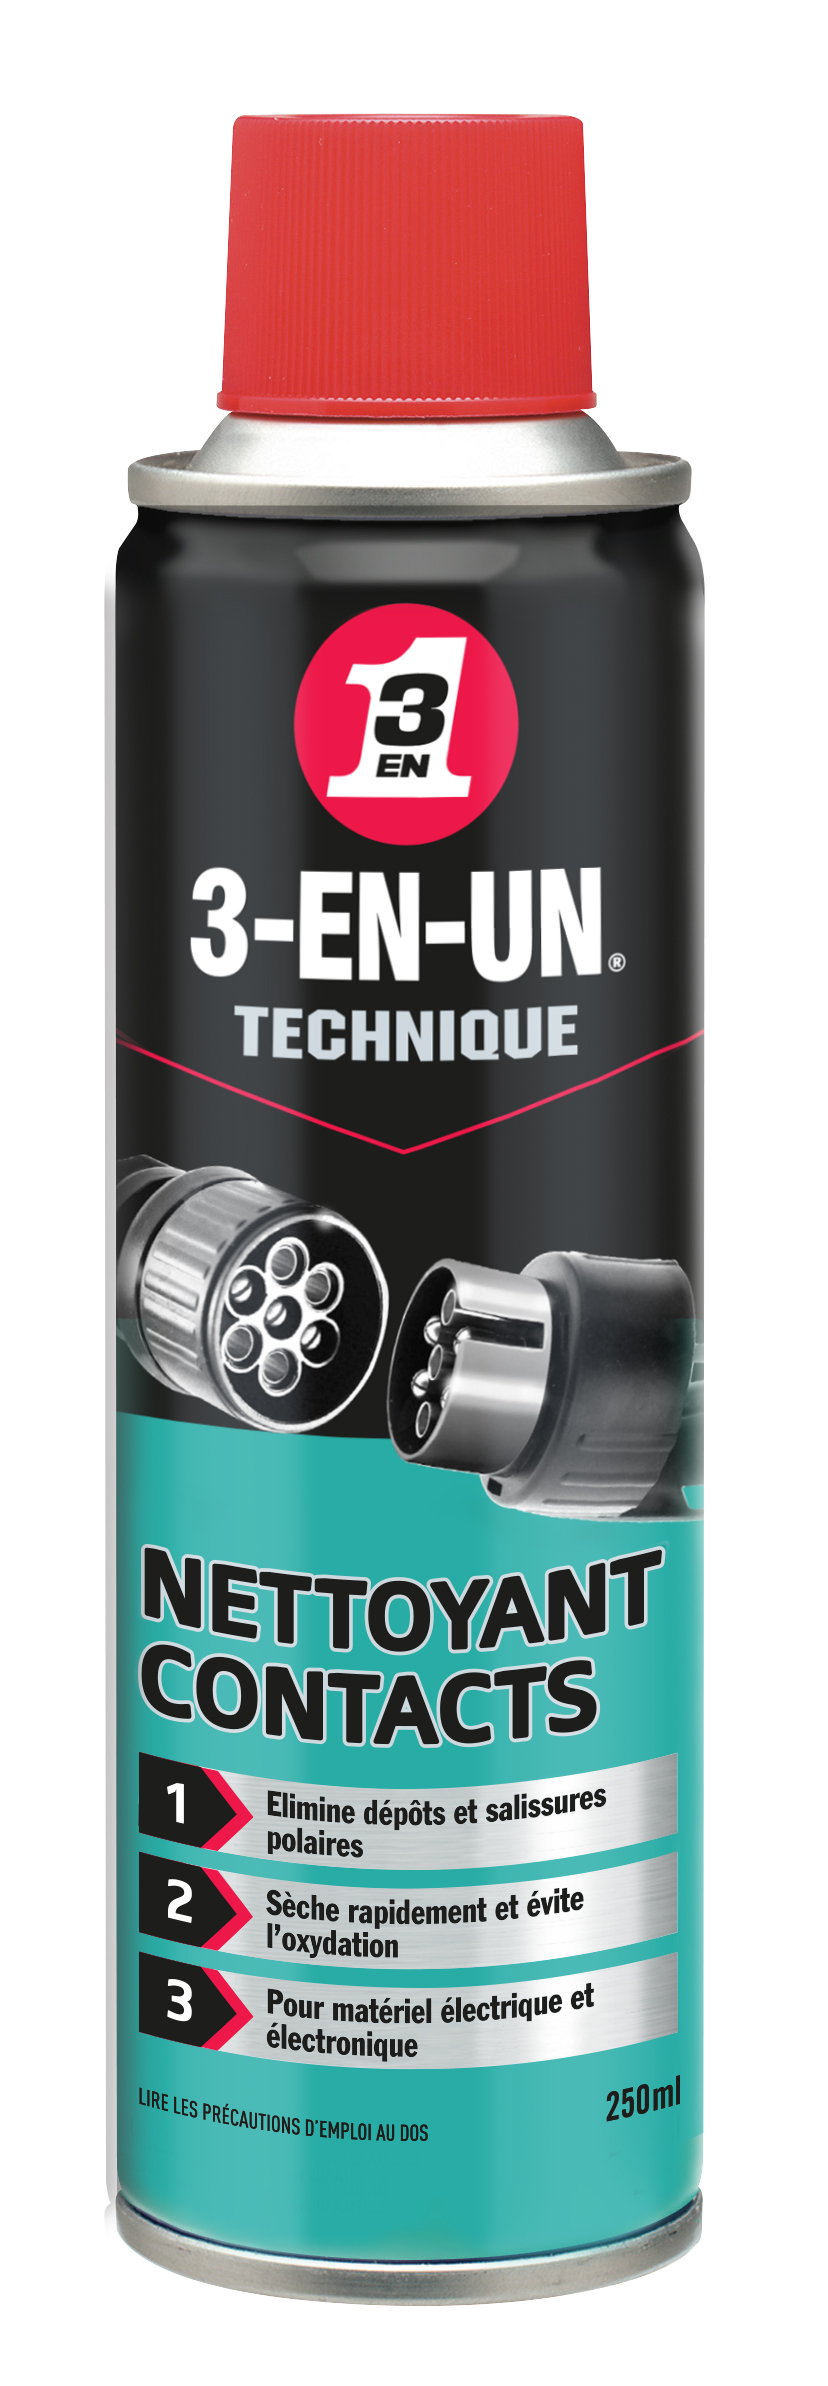 Spray nettoyant contact Technique - 250ml - 3-EN-1